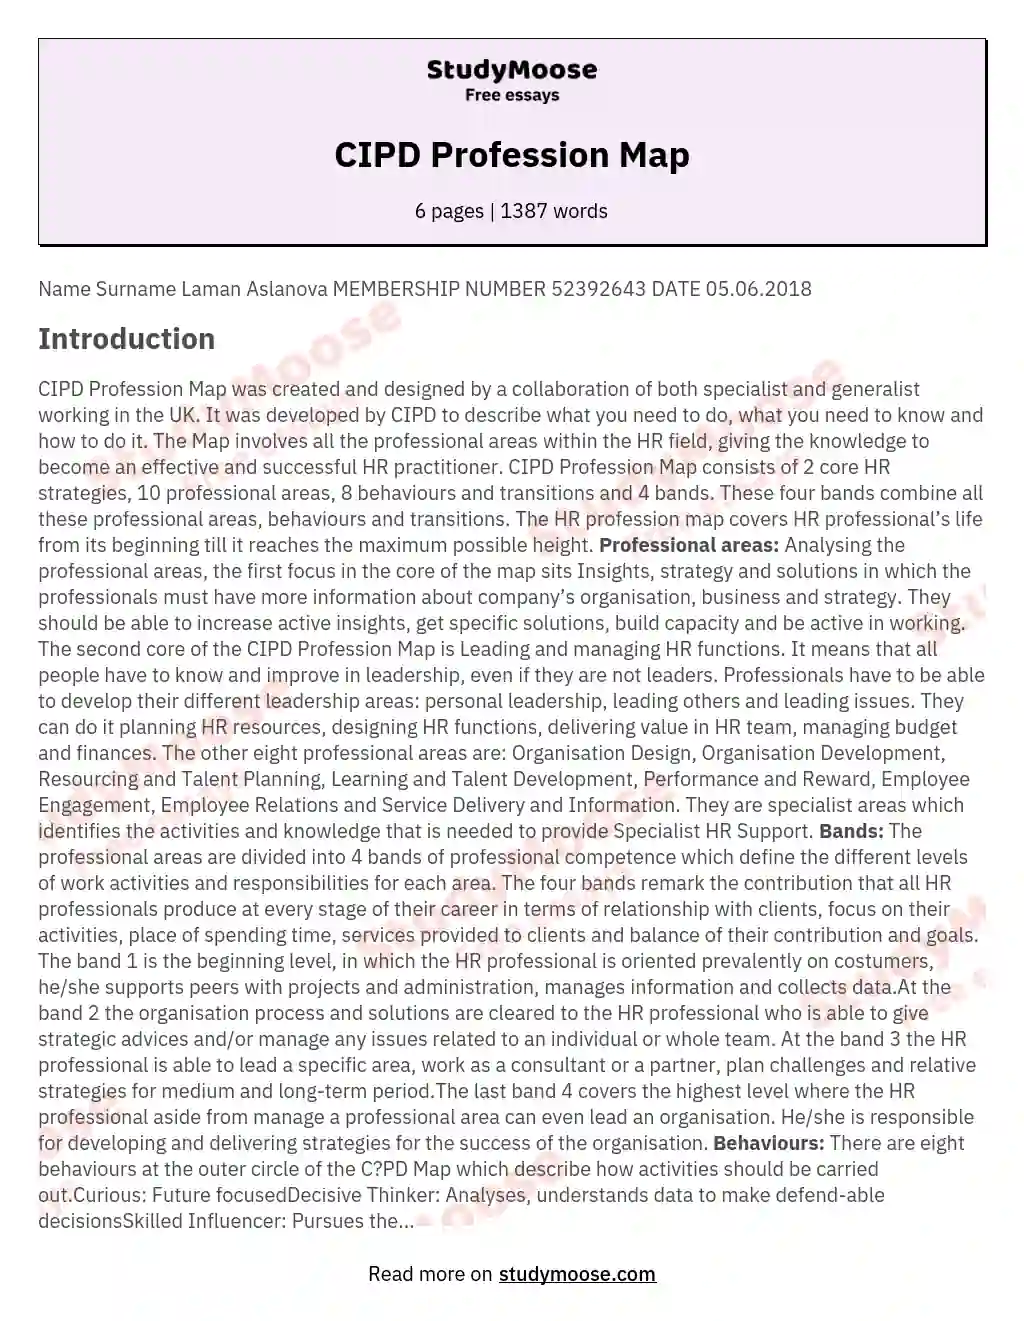 CIPD Profession Map essay